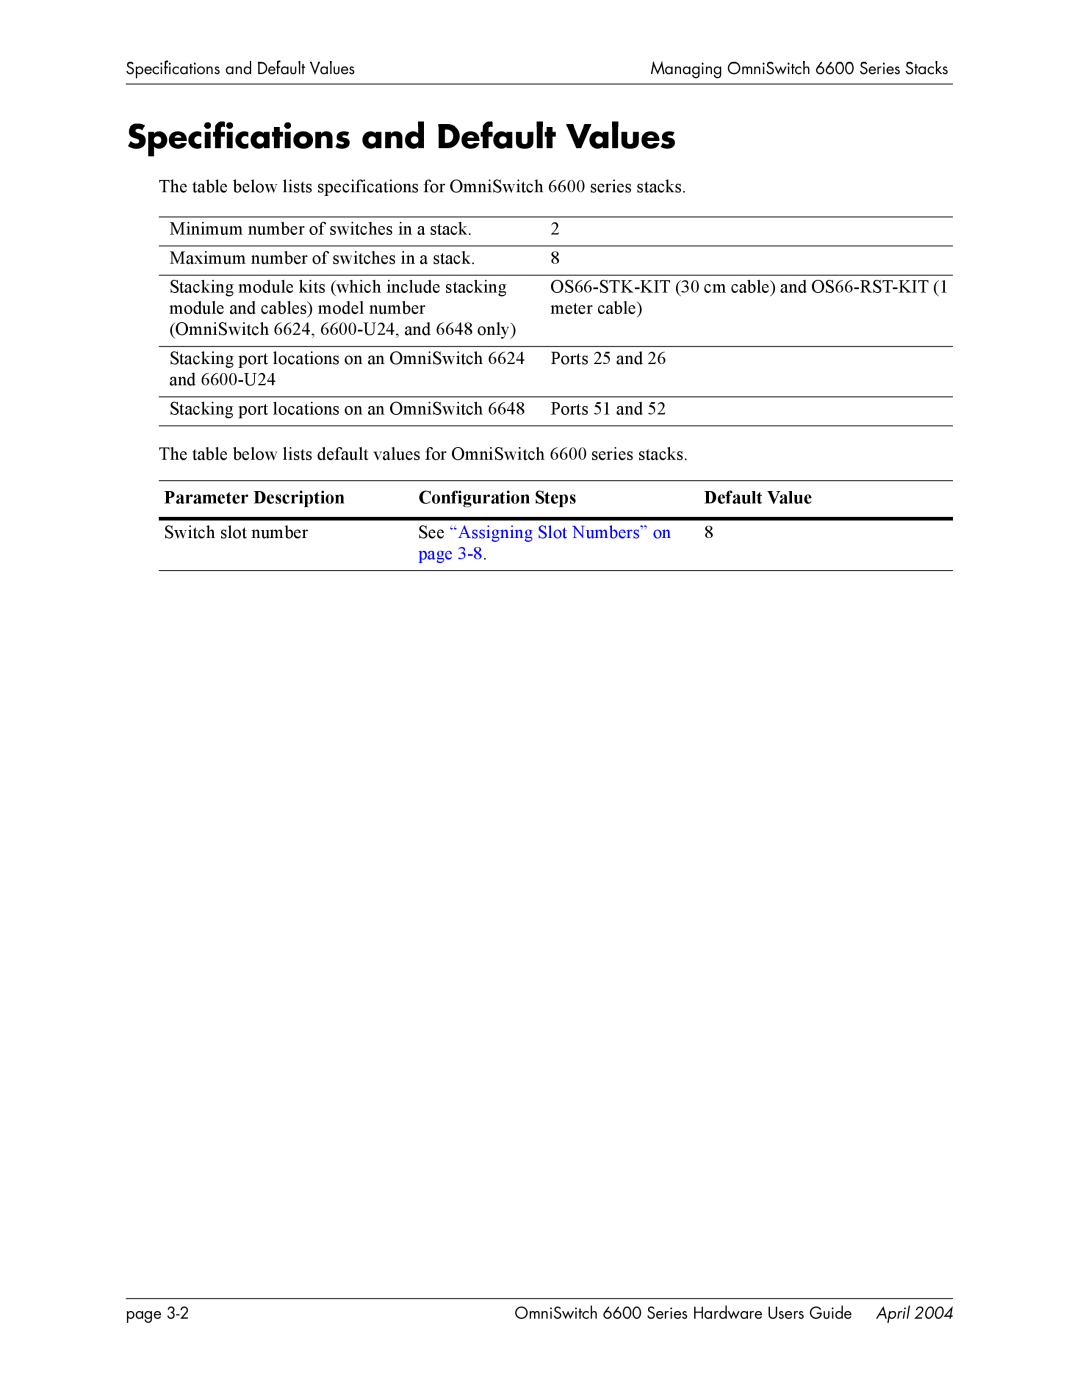 Alcatel-Lucent 6624, 6648, 6600 Series Specifications and Default Values, Parameter Description, Configuration Steps, page 